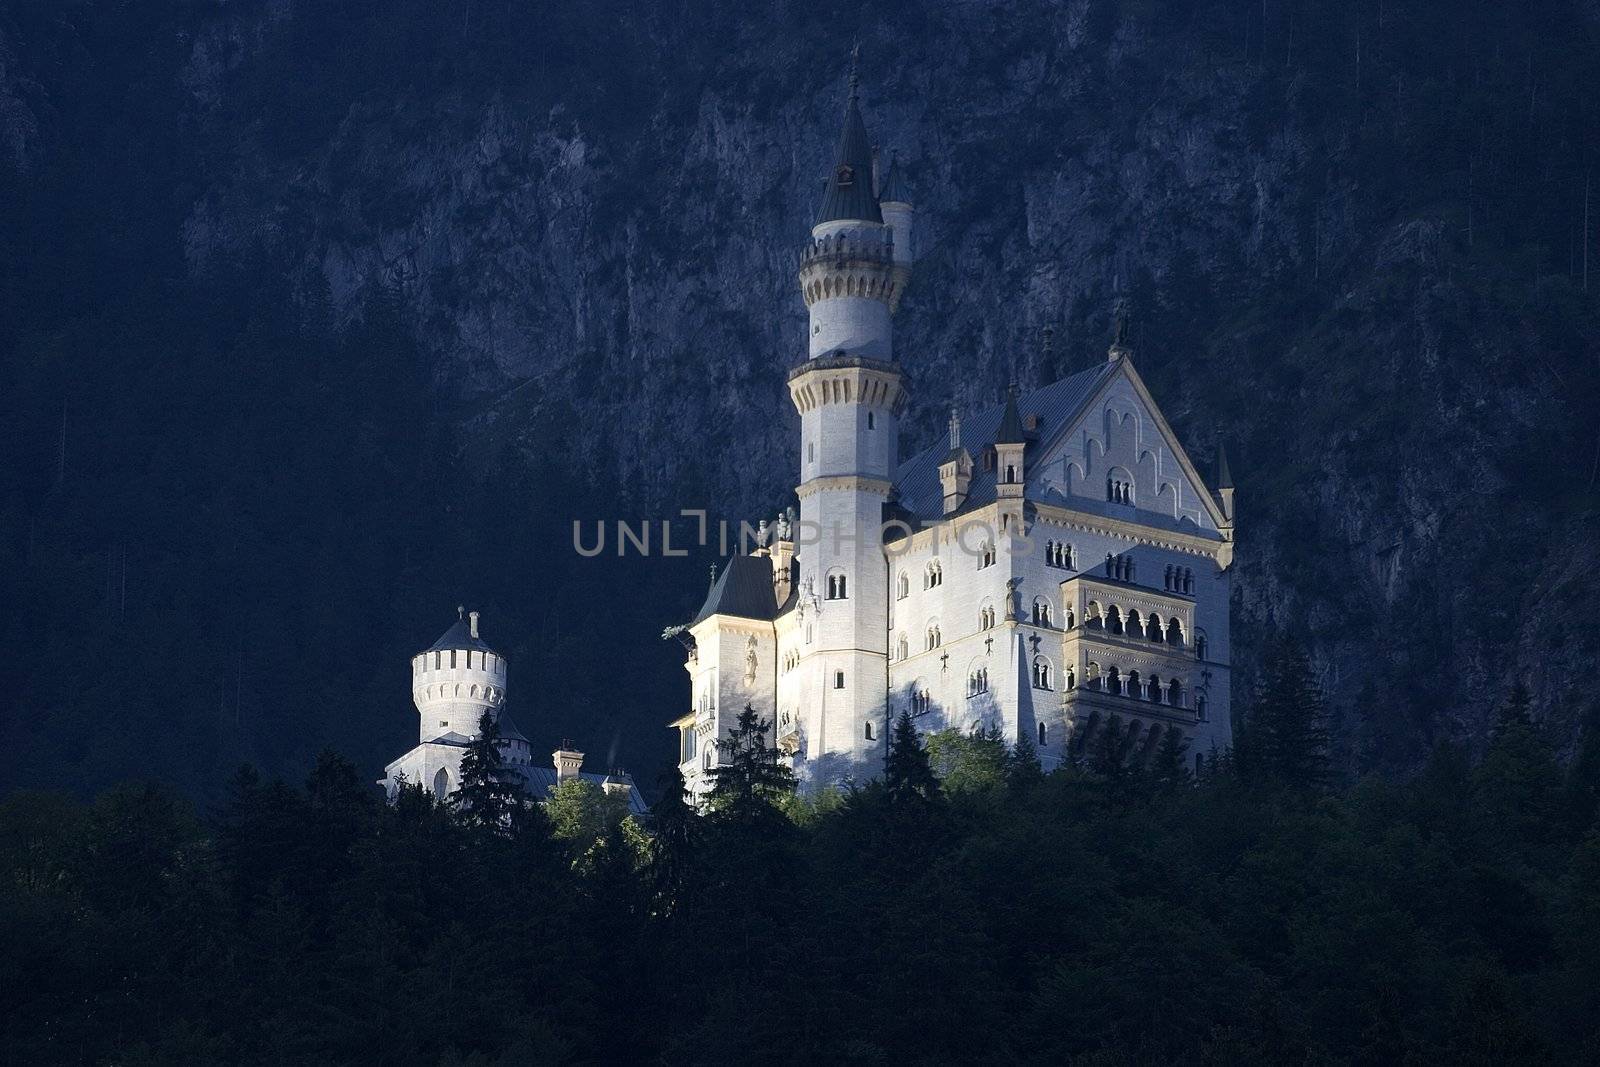 Germanies best known castle, built by King Ludwig II of Bavaria
Beautiful pasture and mountains in Germany ( Allg�u )
Sch�ne Weide und Berge in Deutschland 
